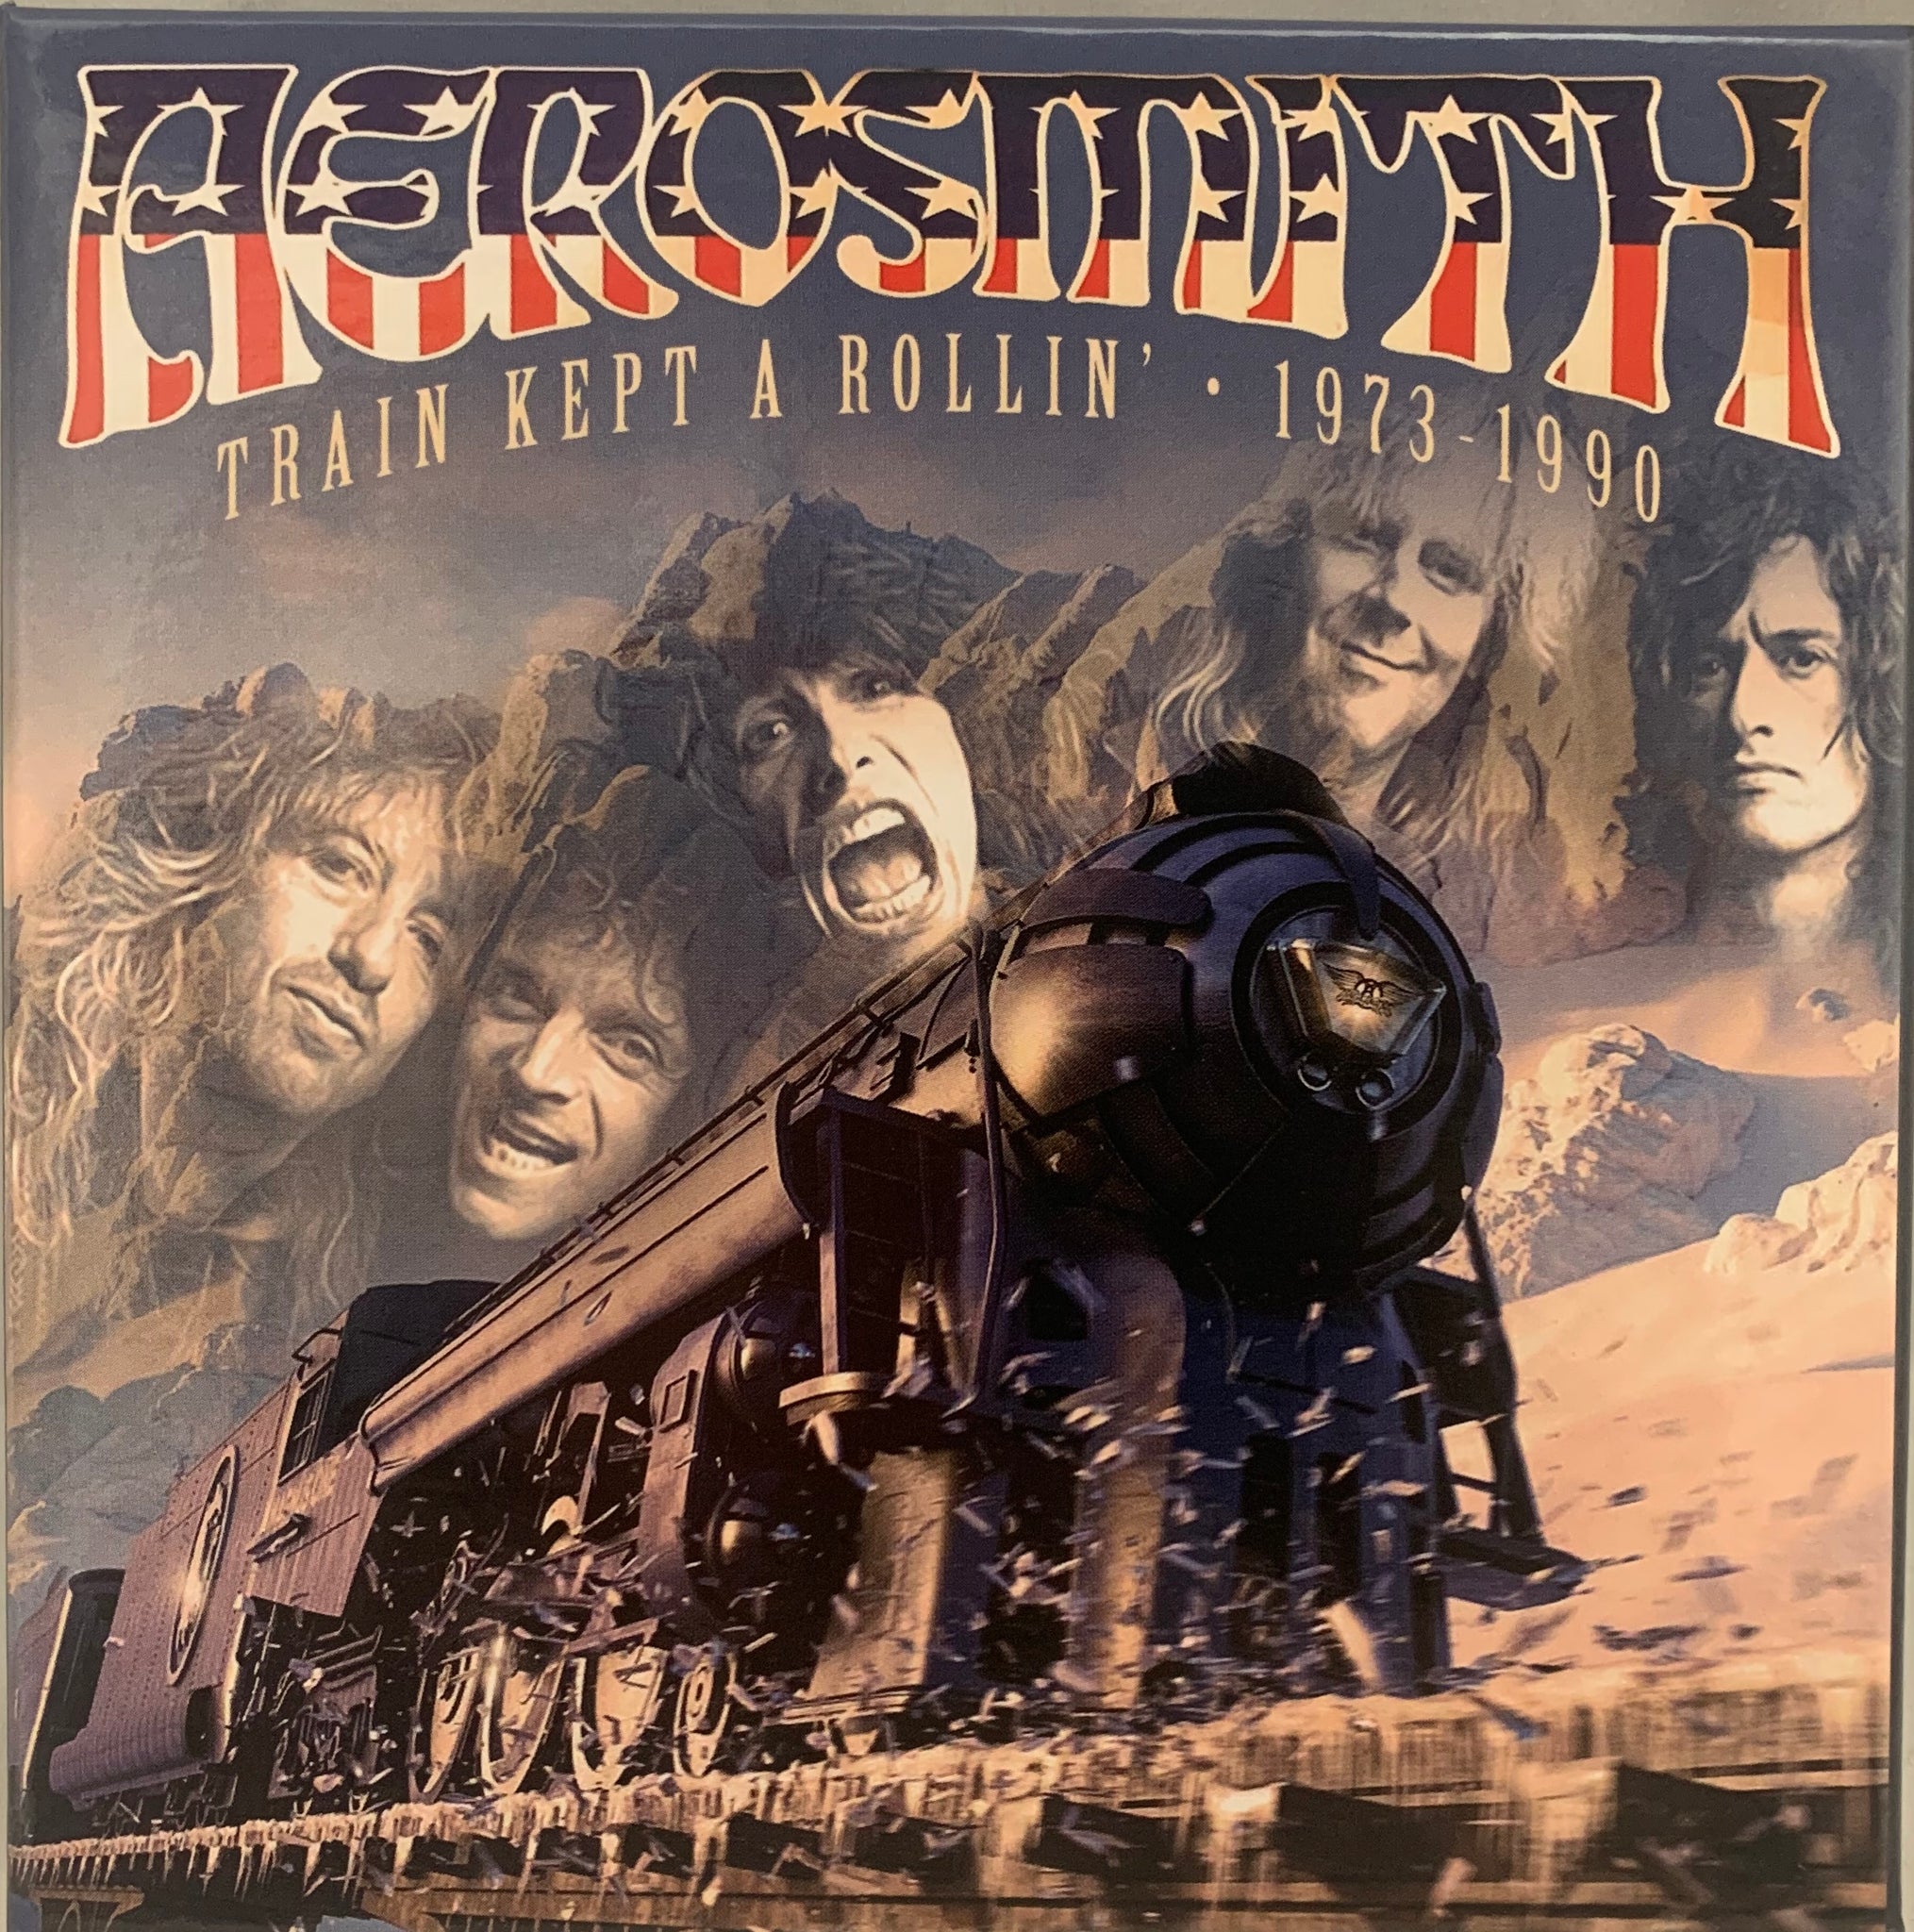 Aerosmith Live Train Kept a Rollin' 1973-1990 10 CD Box Set